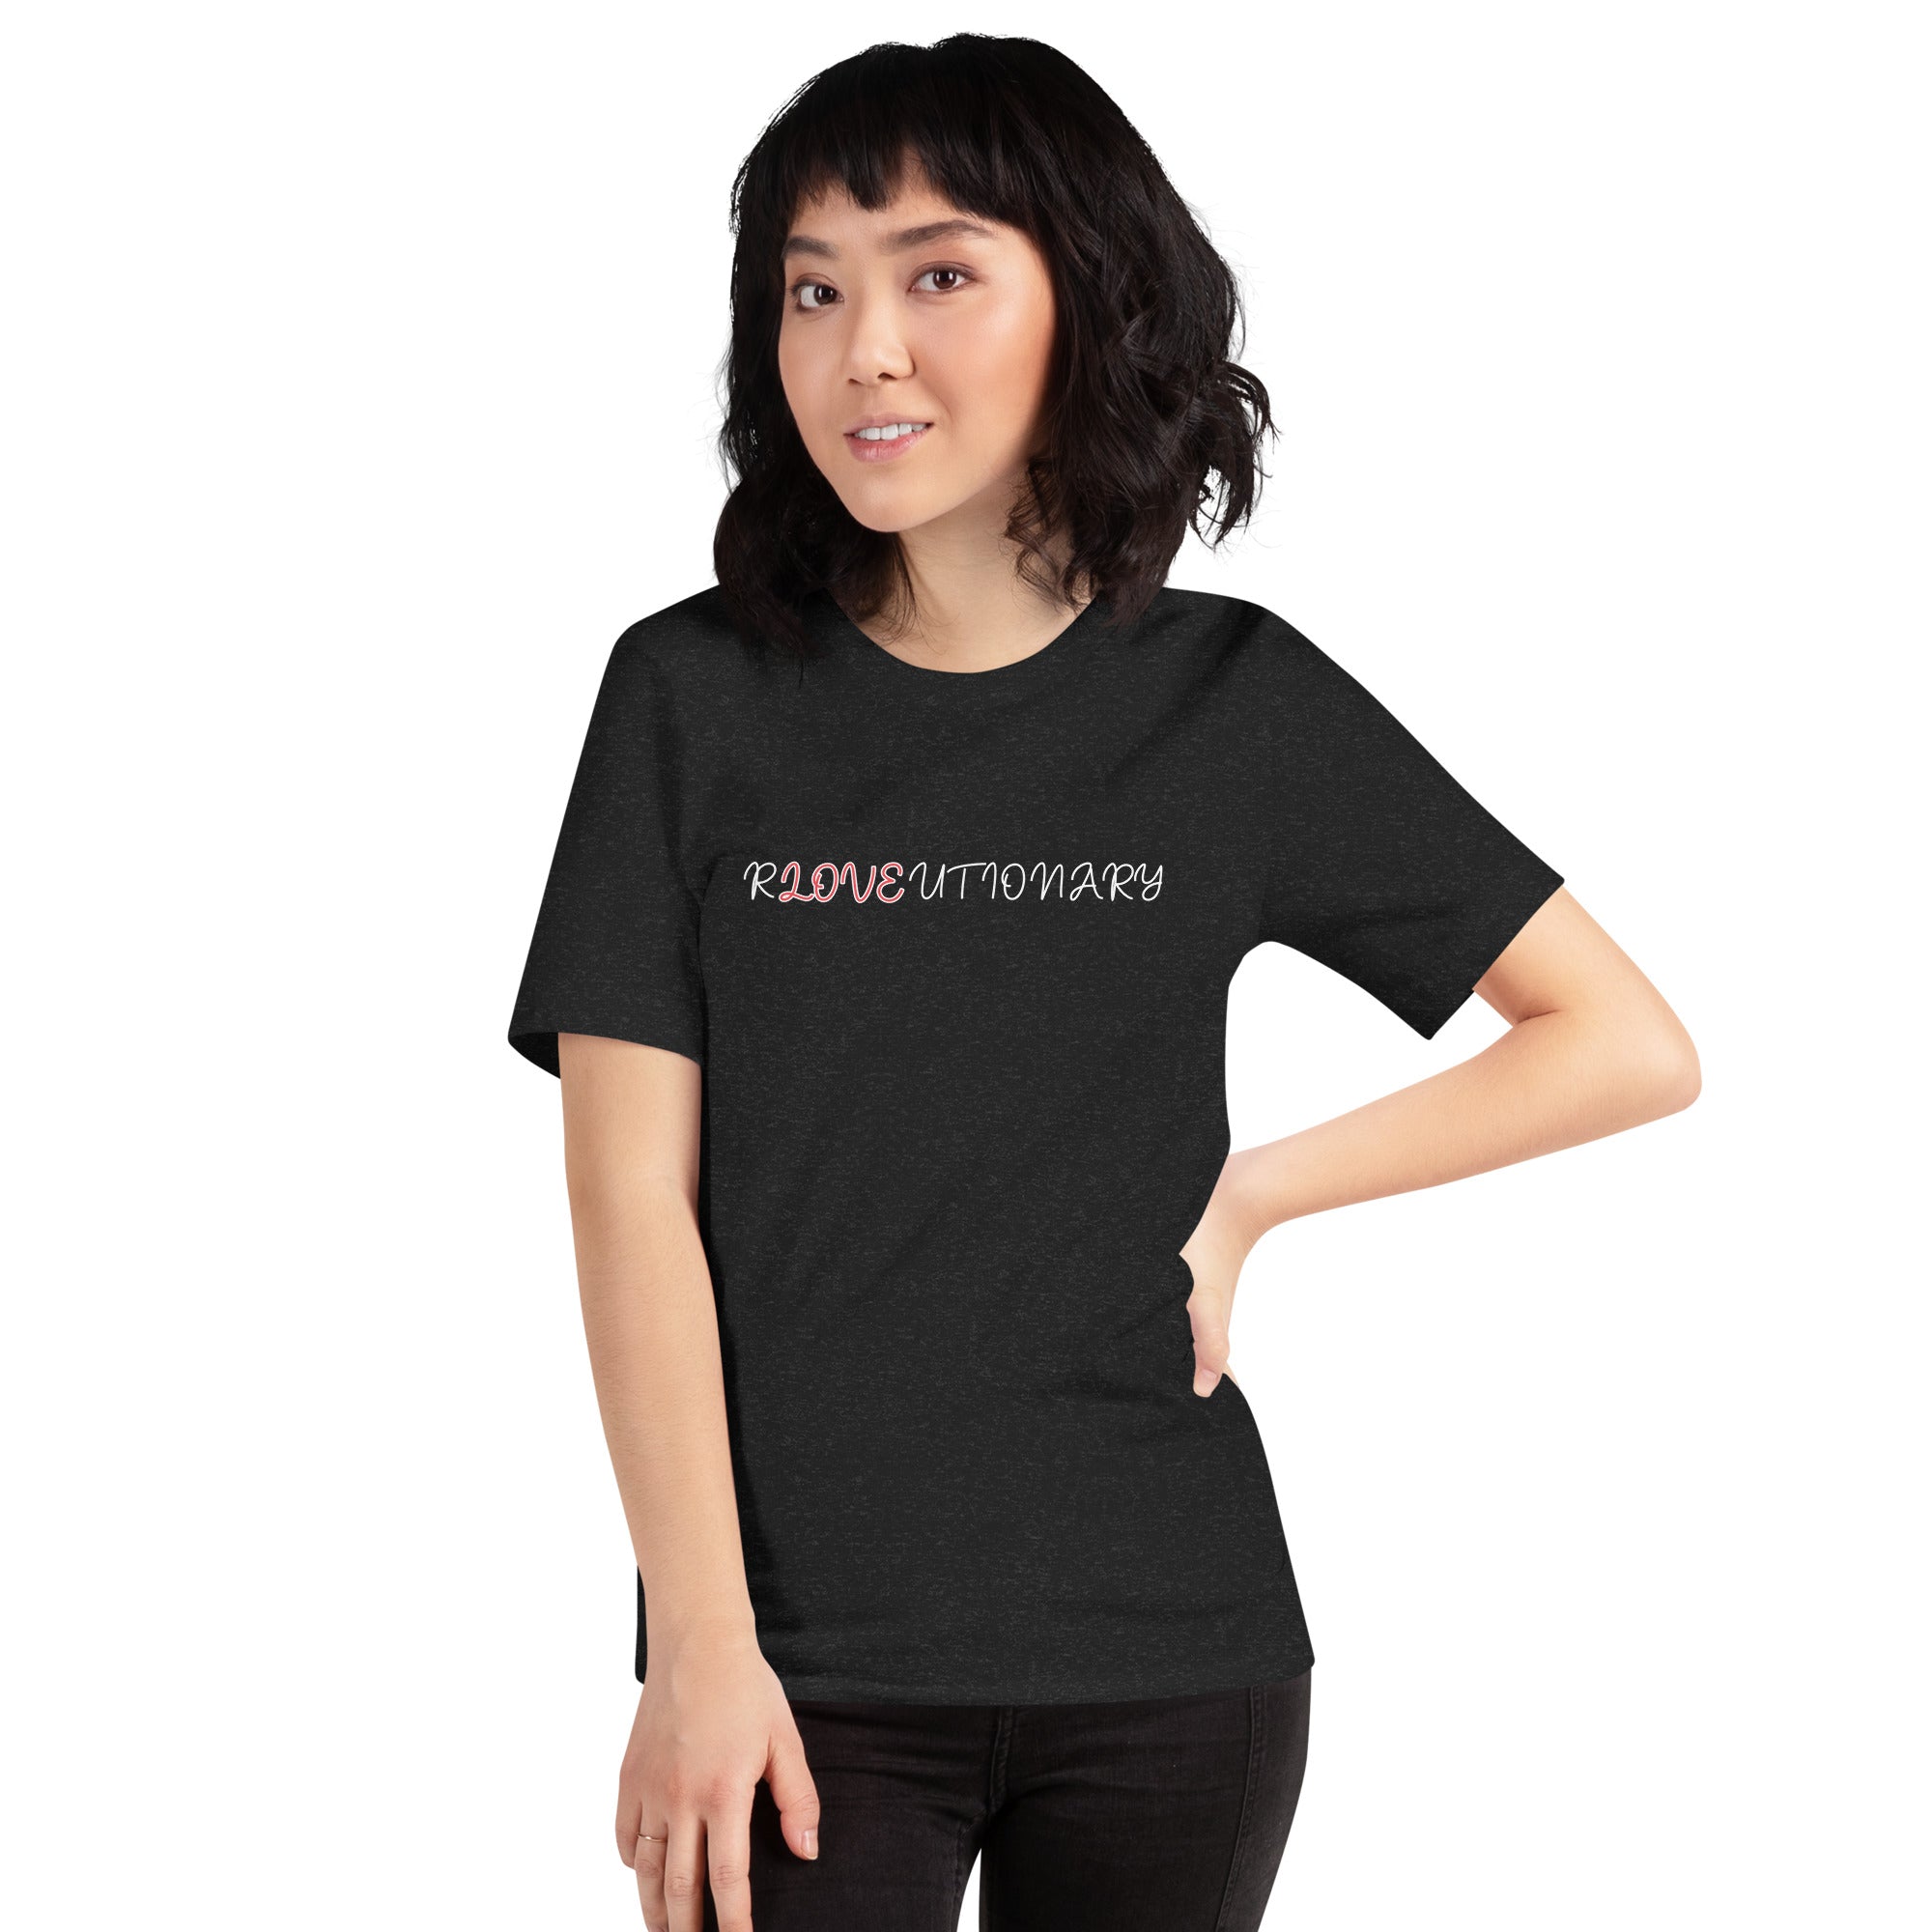 Revolutionary Unisex t-shirt | Positive Affirmation T-Shirt